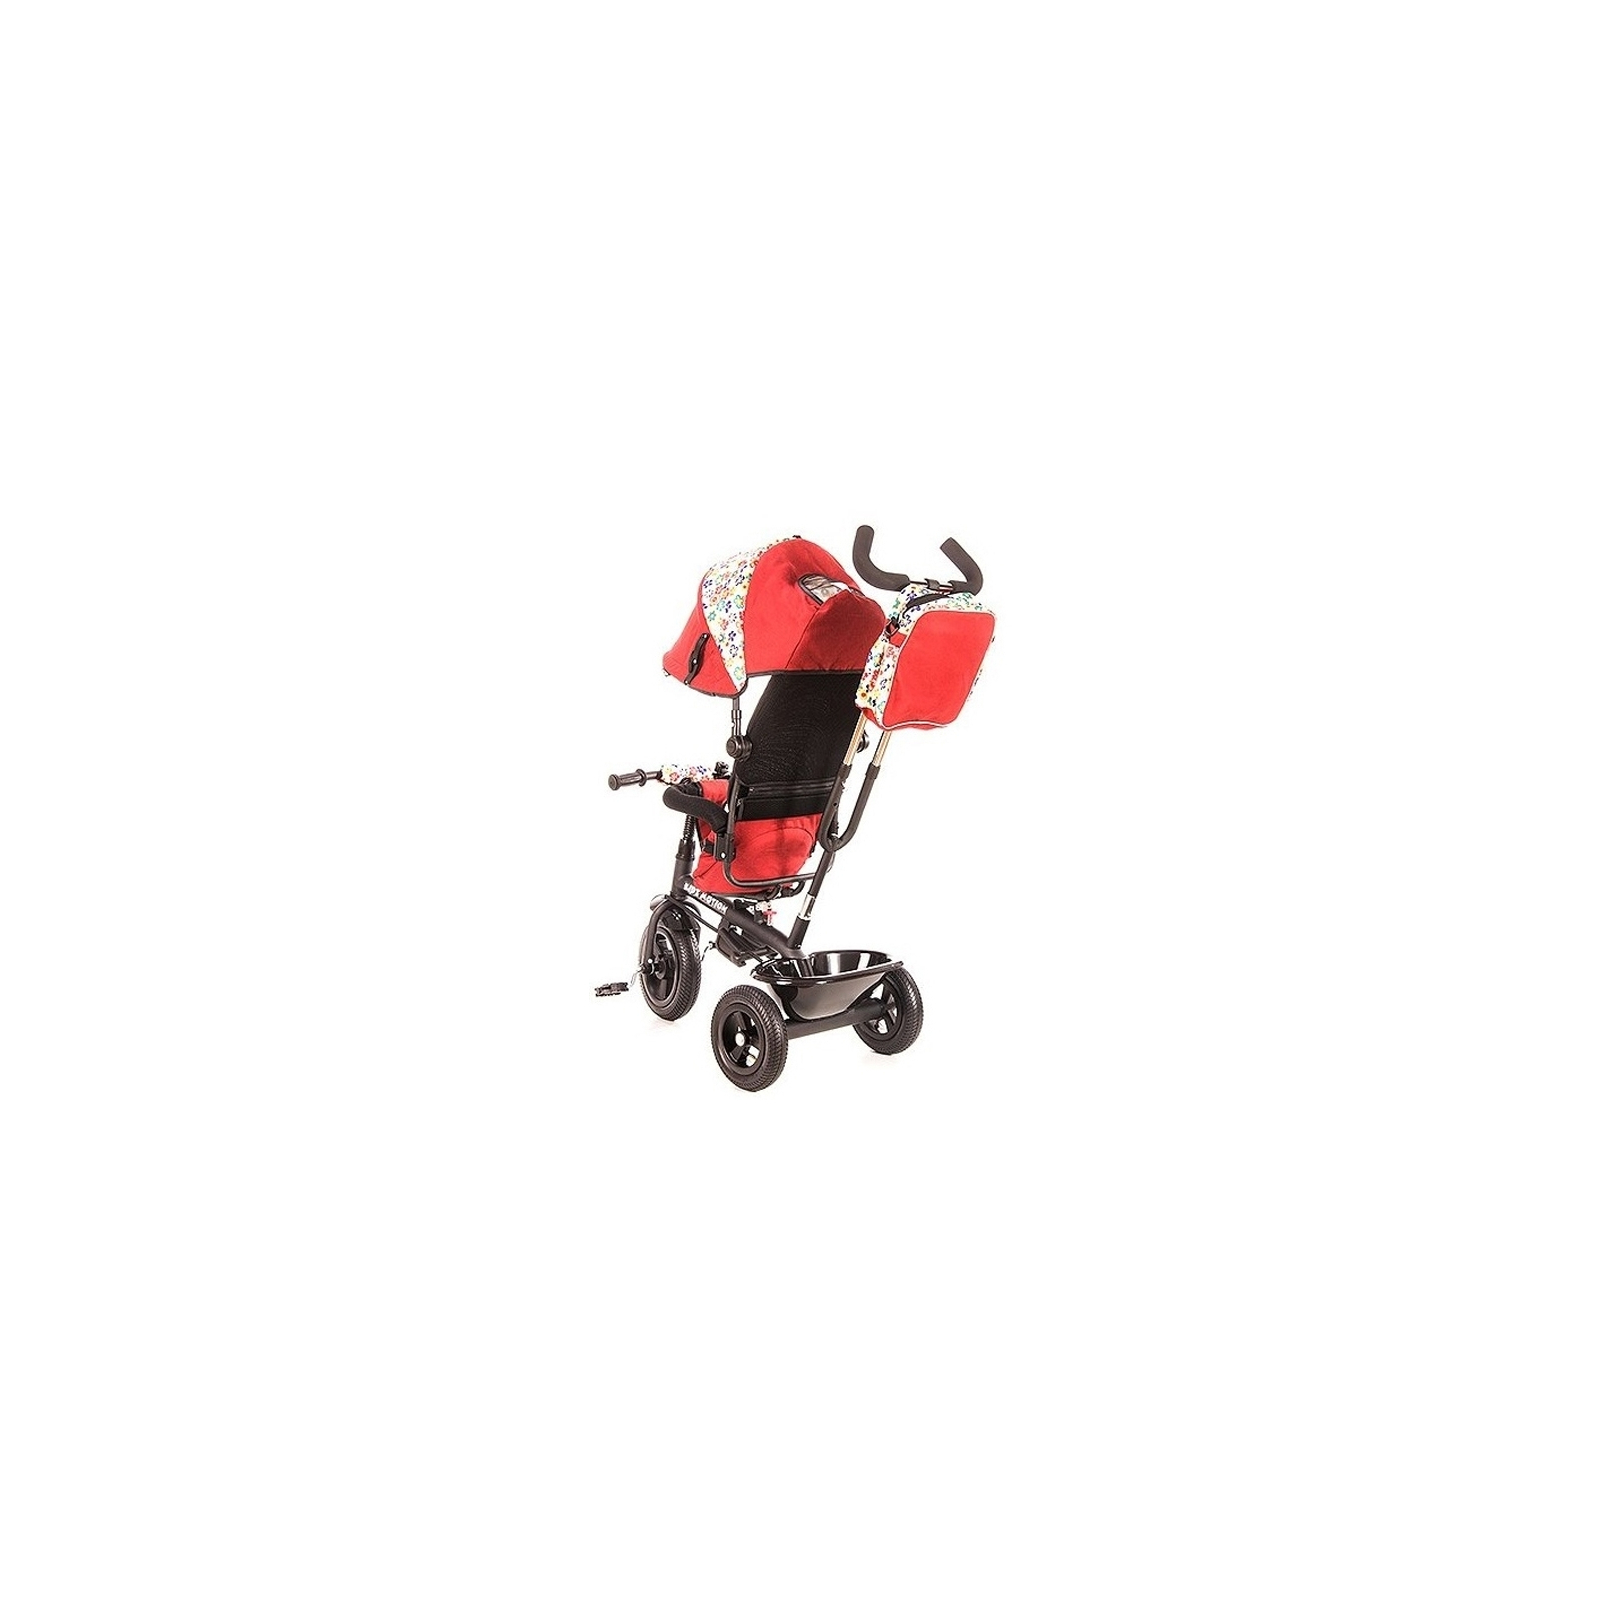 Дитячий велосипед KidzMotion Tobi Venture RED (115002/red) зображення 2